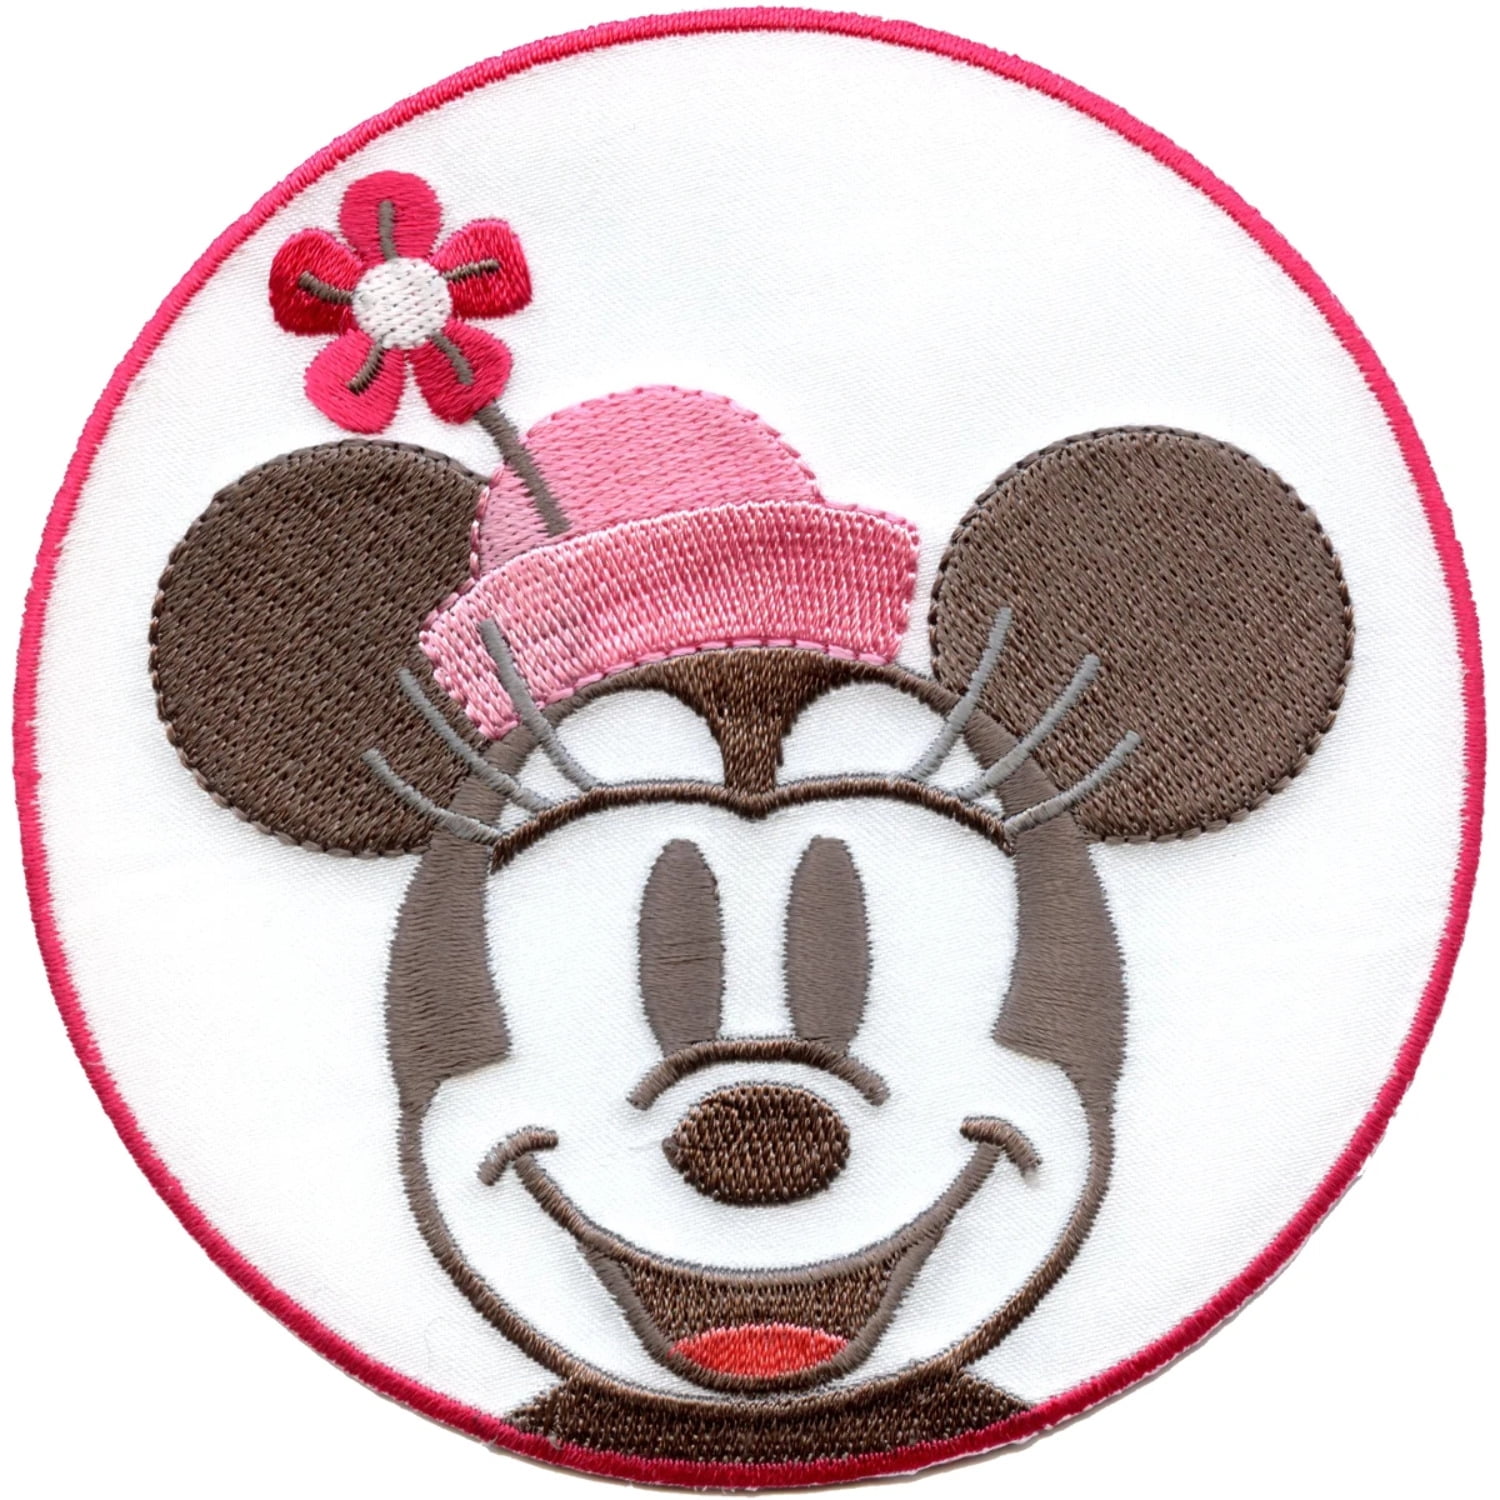 Patch Minnie Mouse 85x60m 1pc